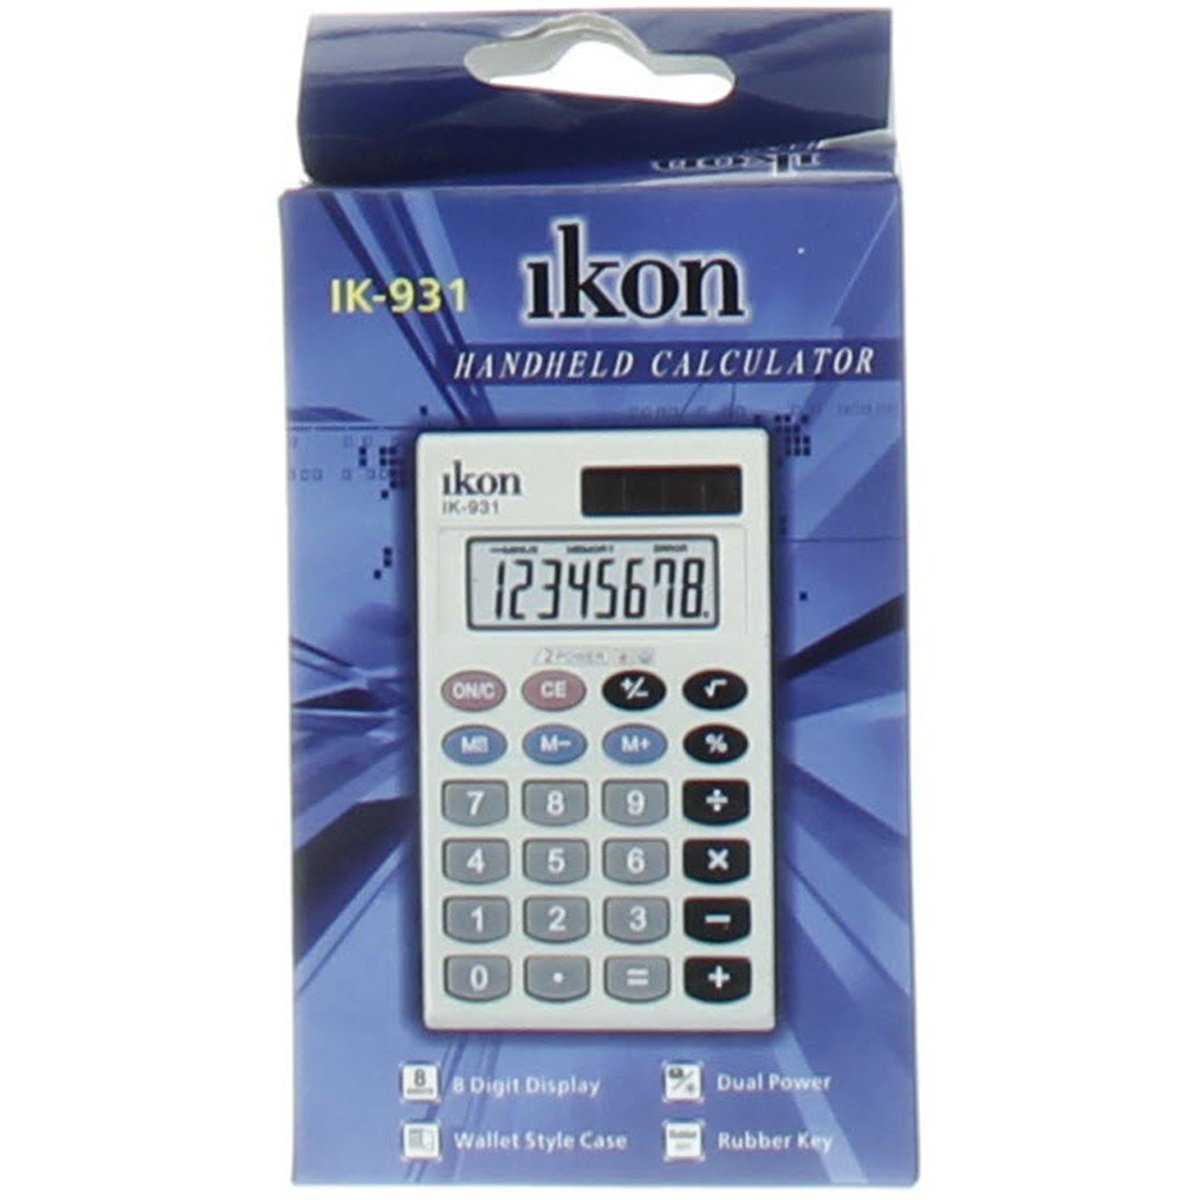 Ikon Handheld Calculator IK-931